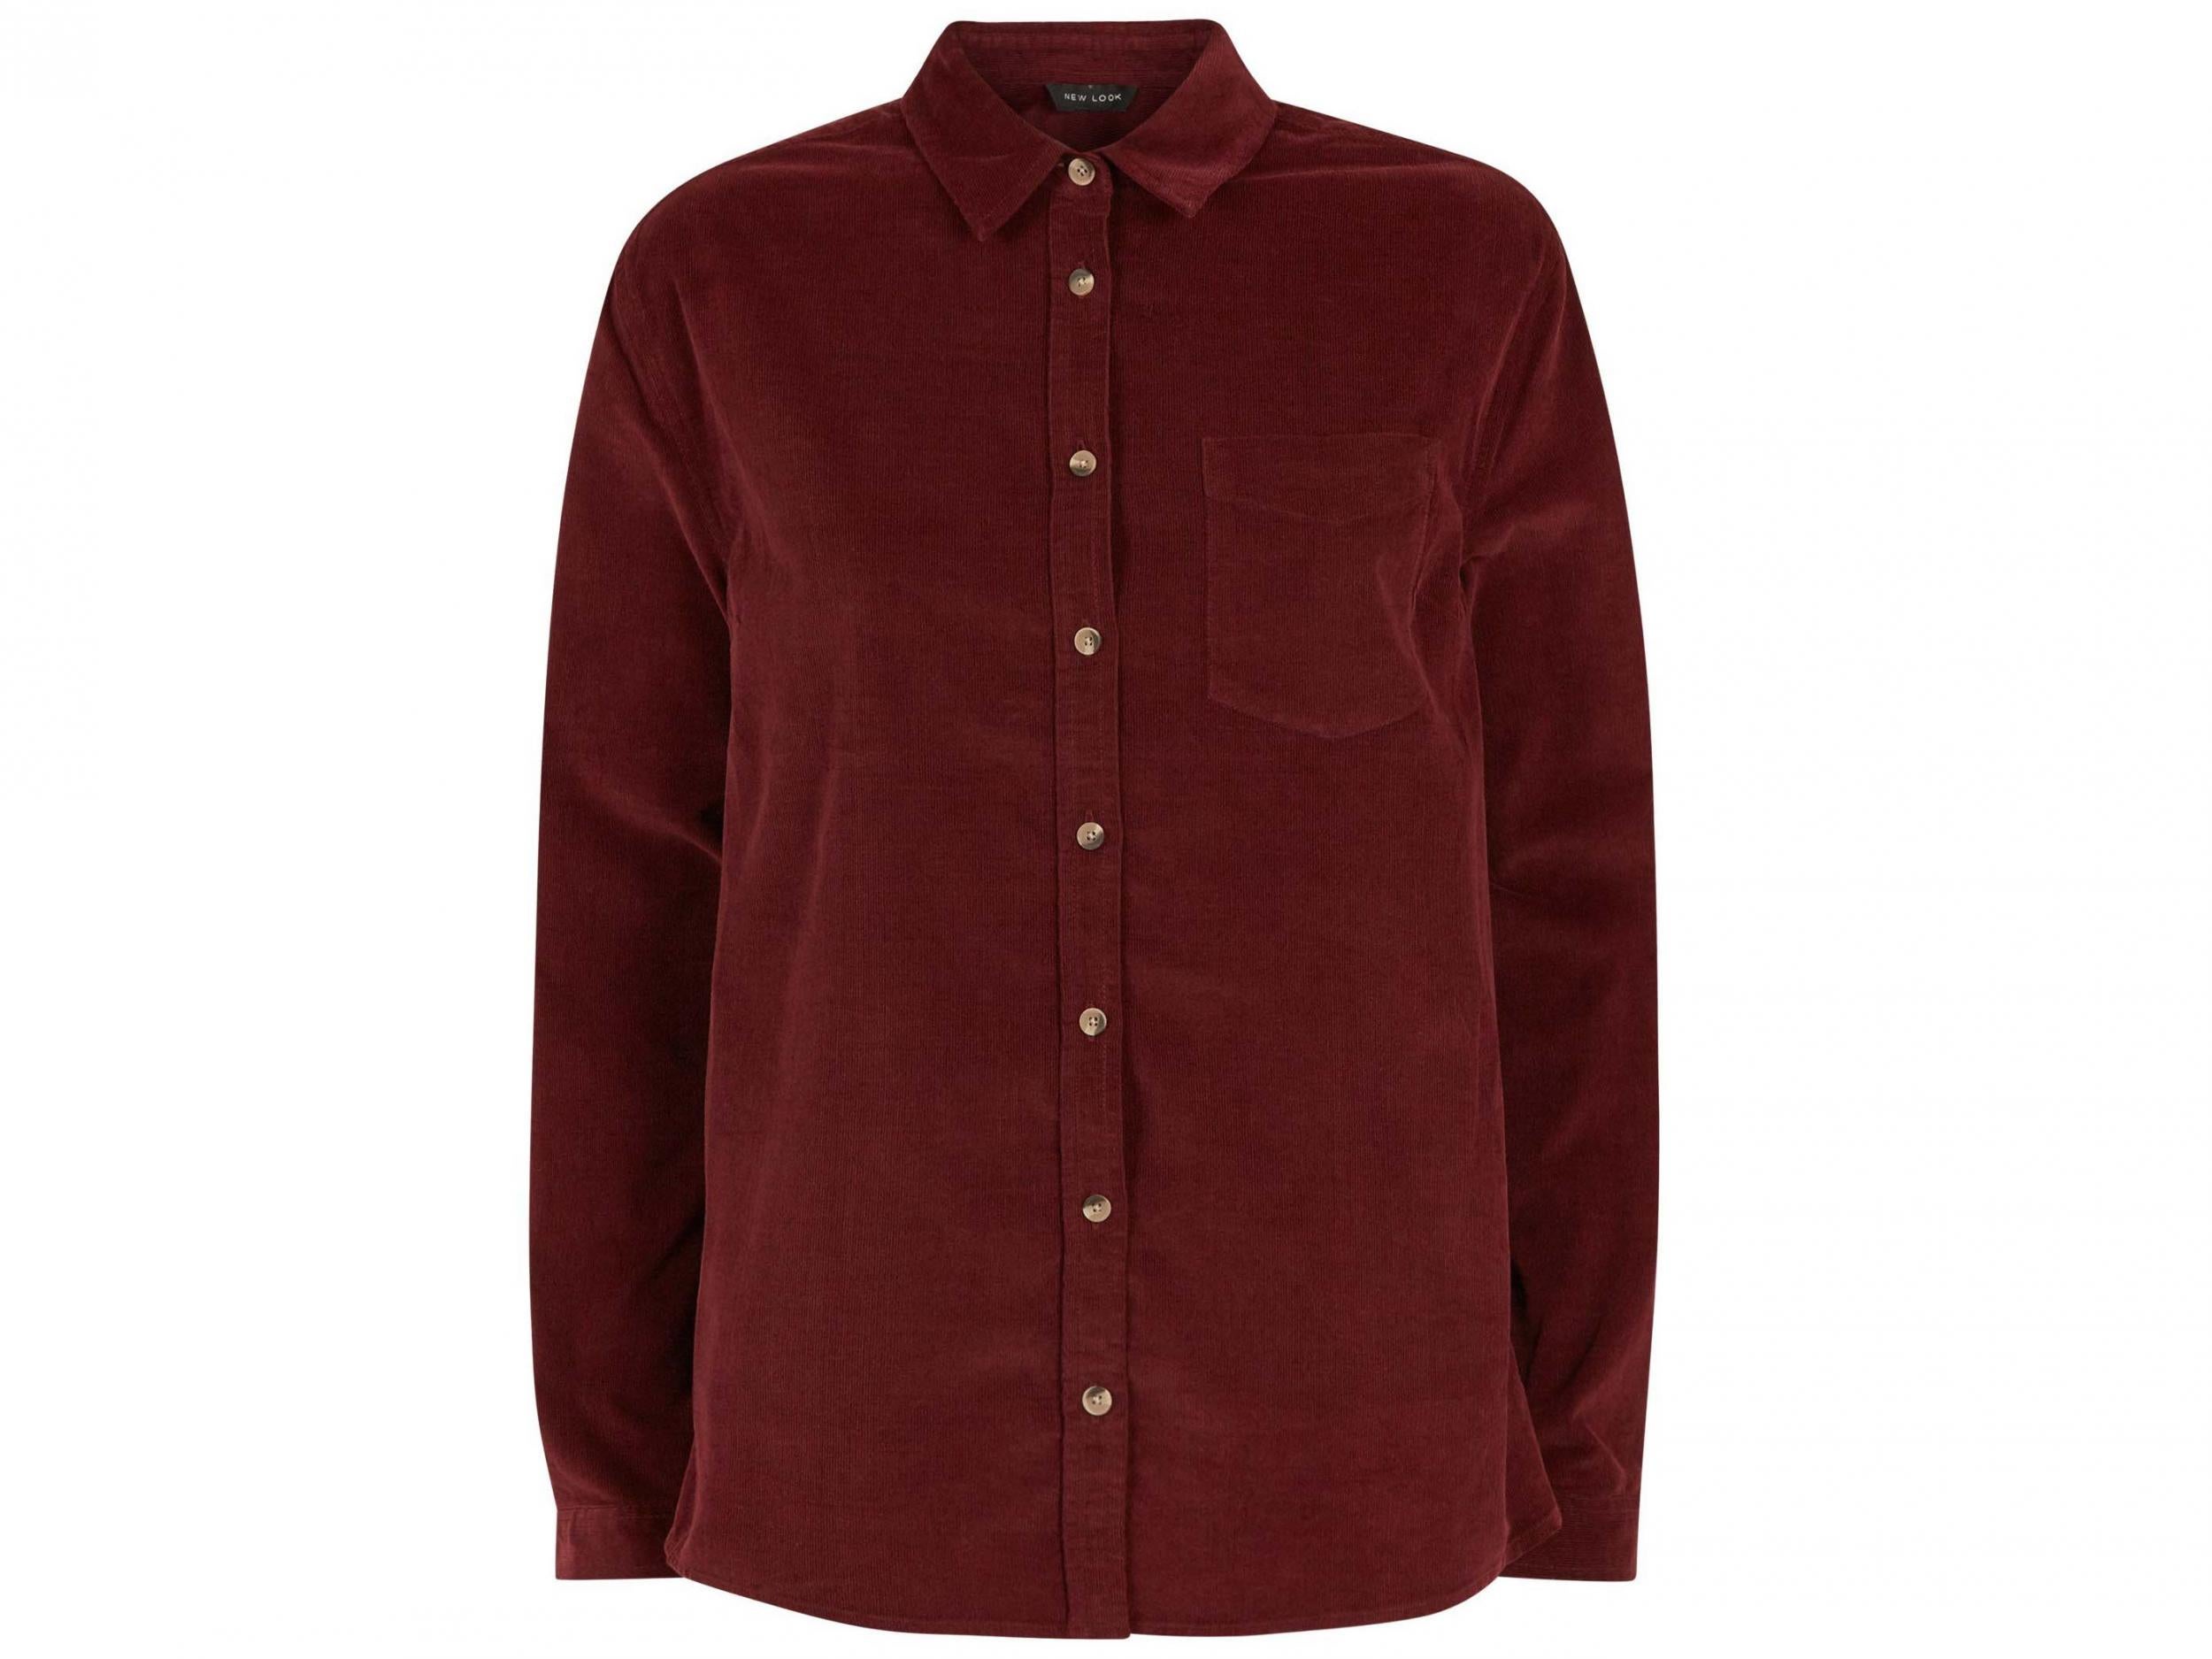 Corduroy Long Sleeve Collared Shirt, £19.99, New Look